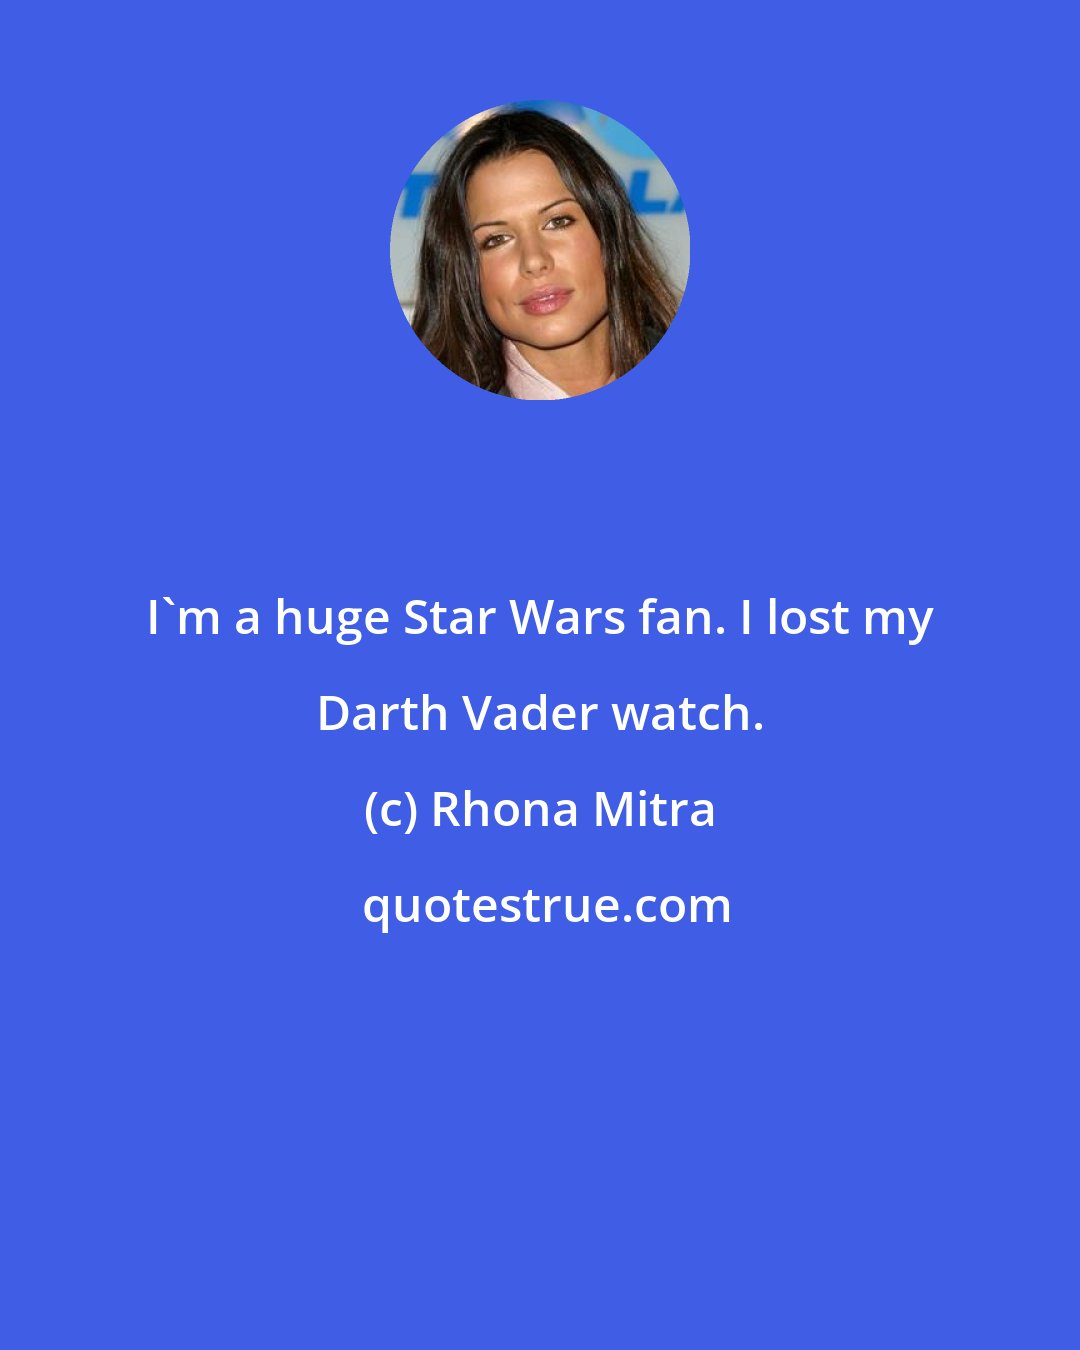 Rhona Mitra: I'm a huge Star Wars fan. I lost my Darth Vader watch.